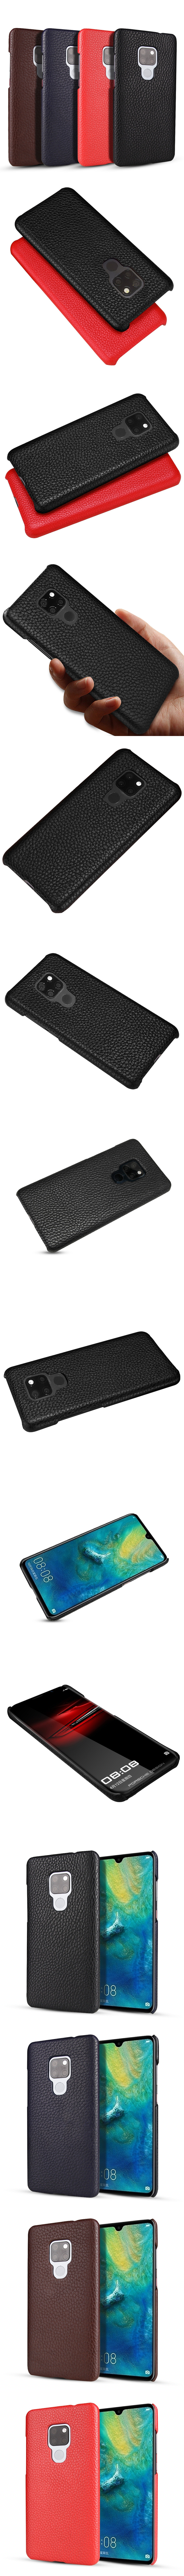 590-Huawei-真皮荔枝紋背蓋手機殼